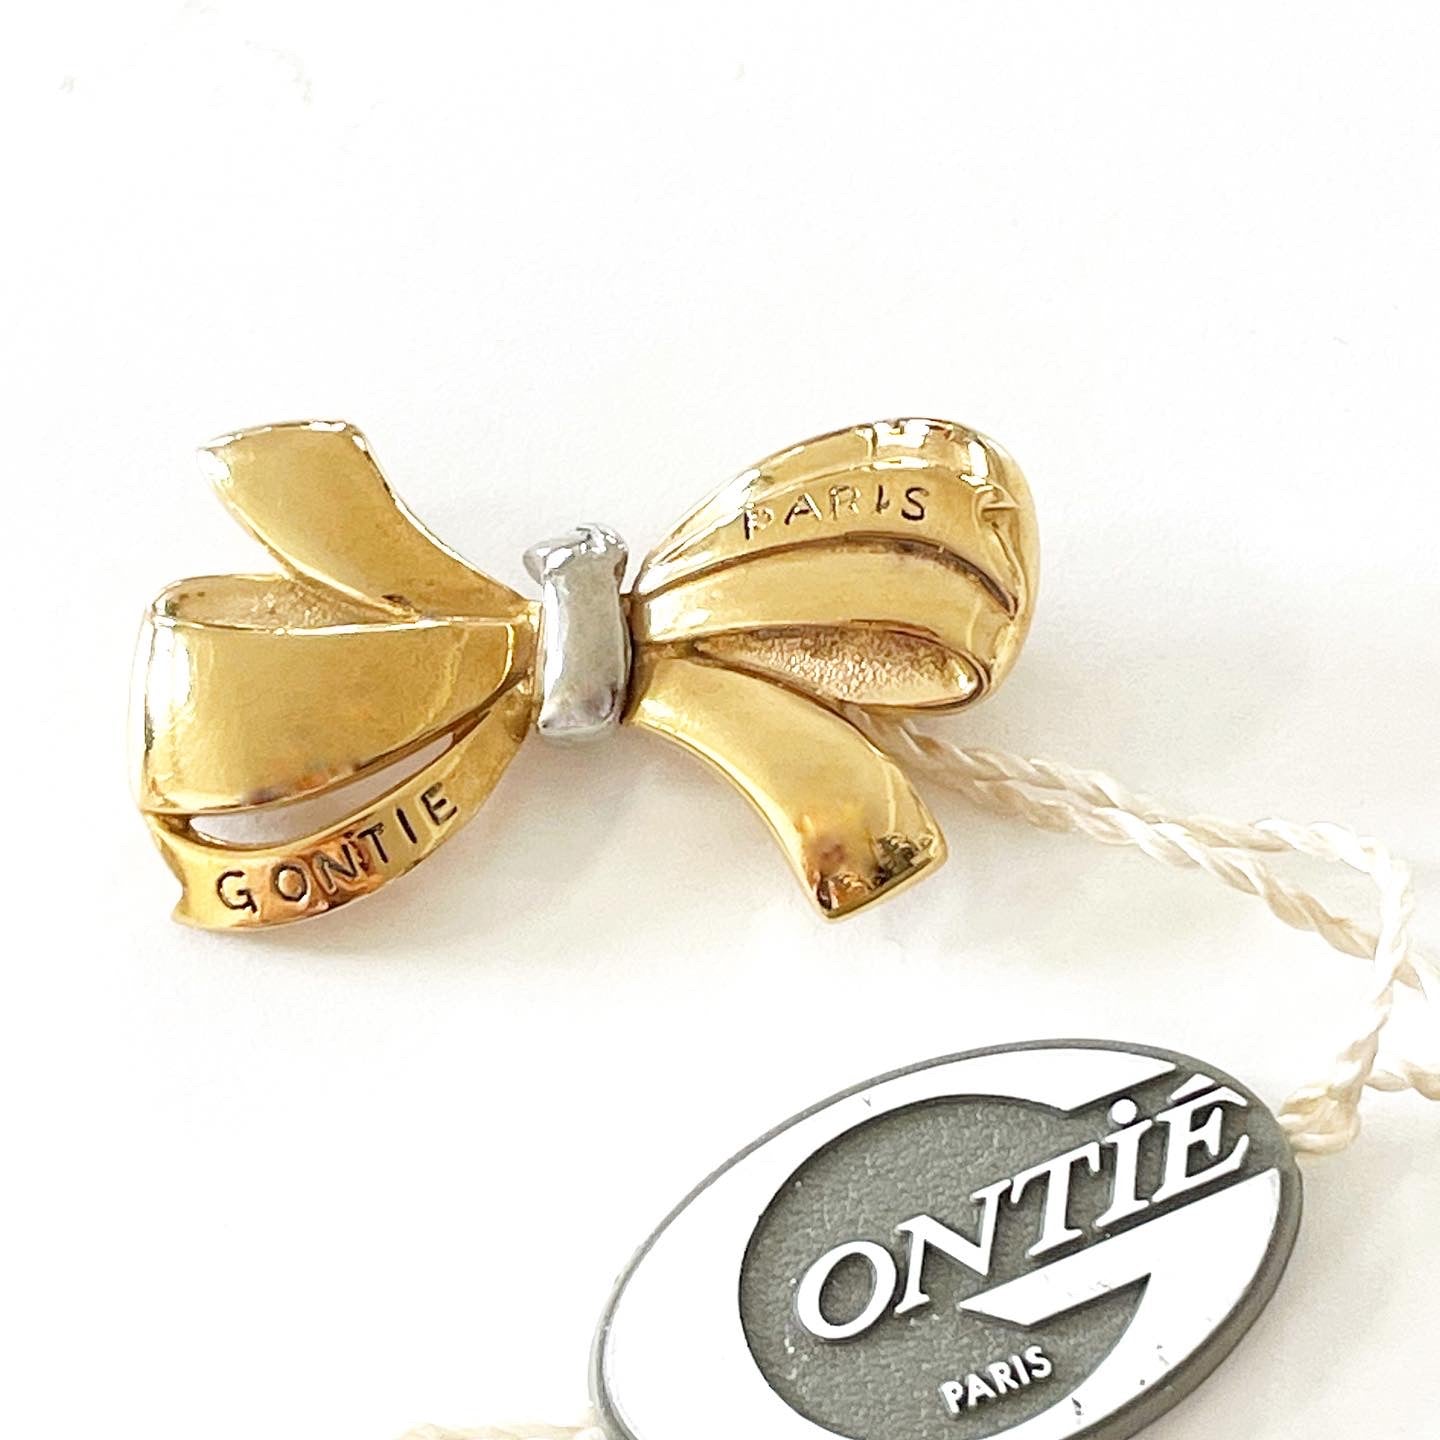 Vintage Gontie Paris signed gold tone bow brooch